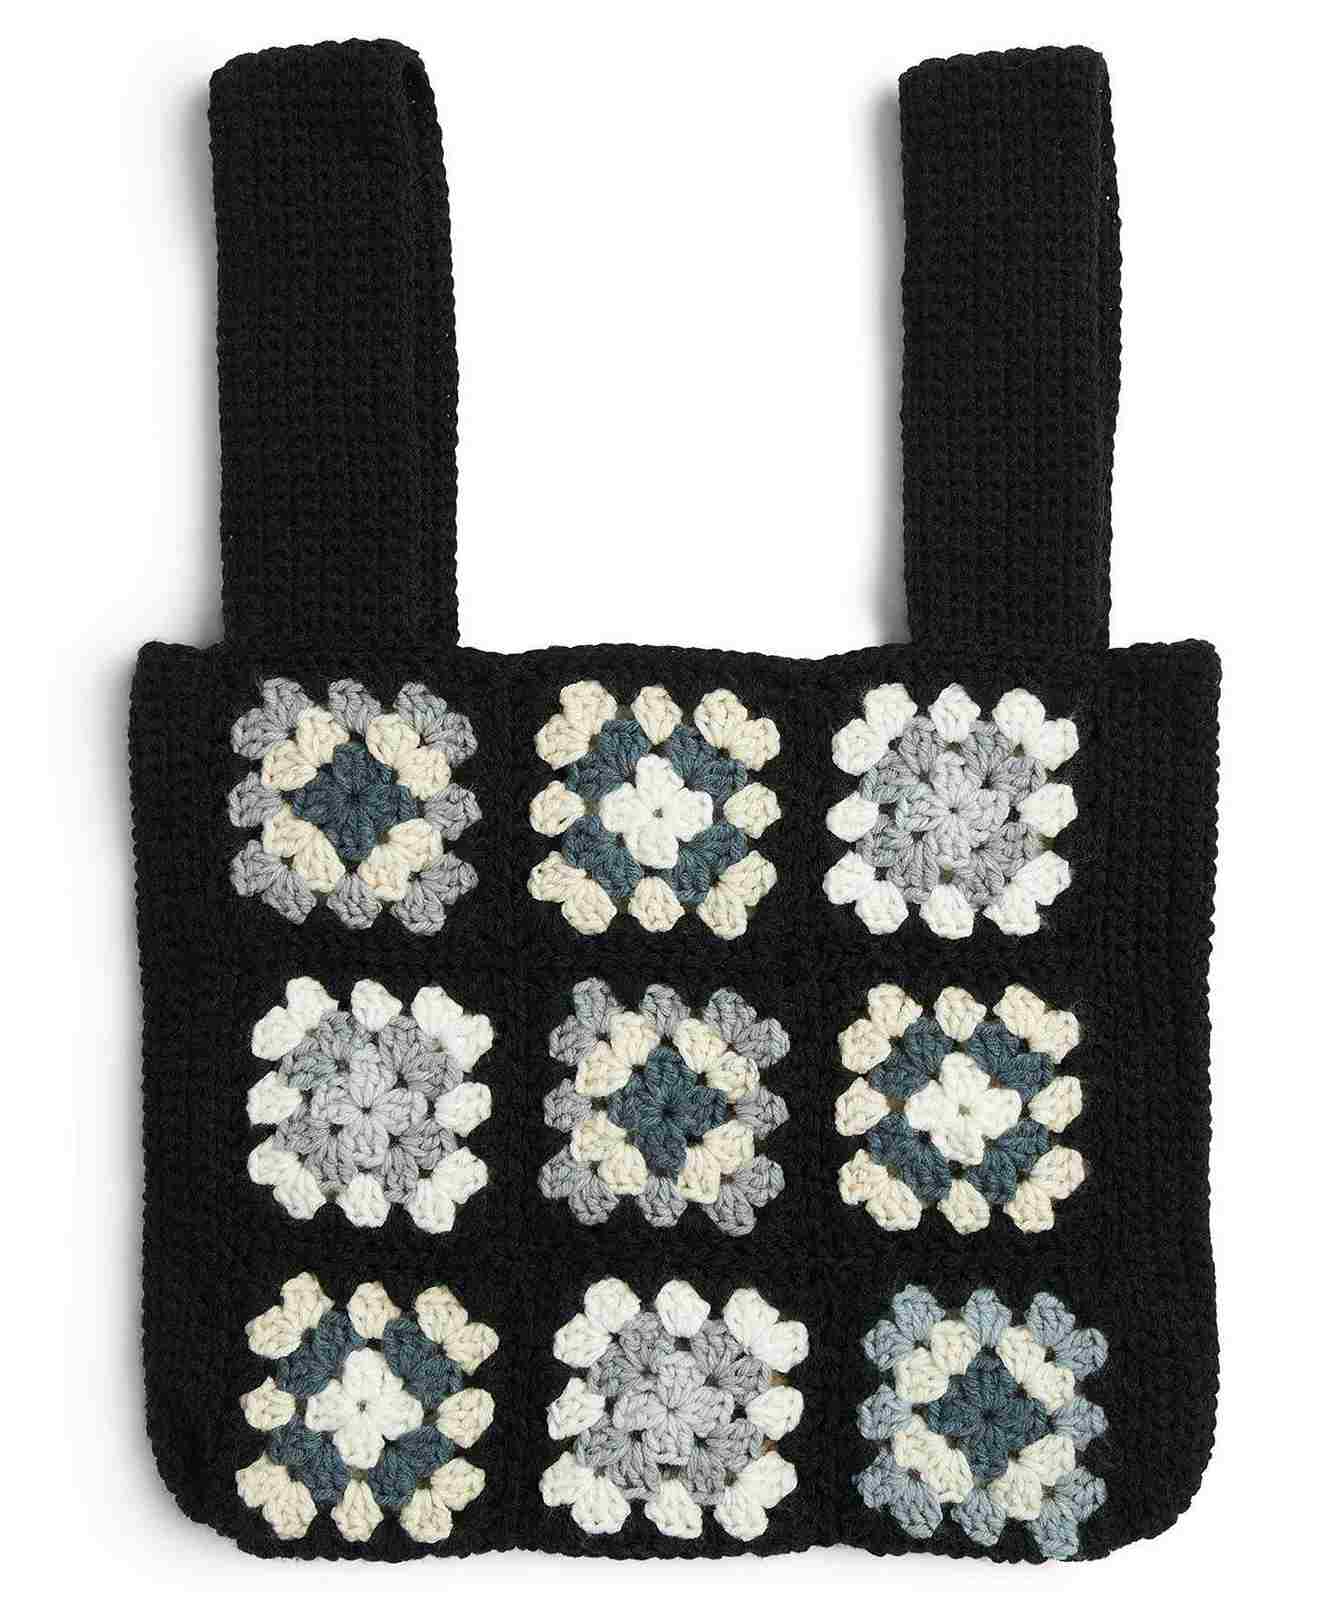 Crochet Granny Square Bag - Free Crochet Pattern